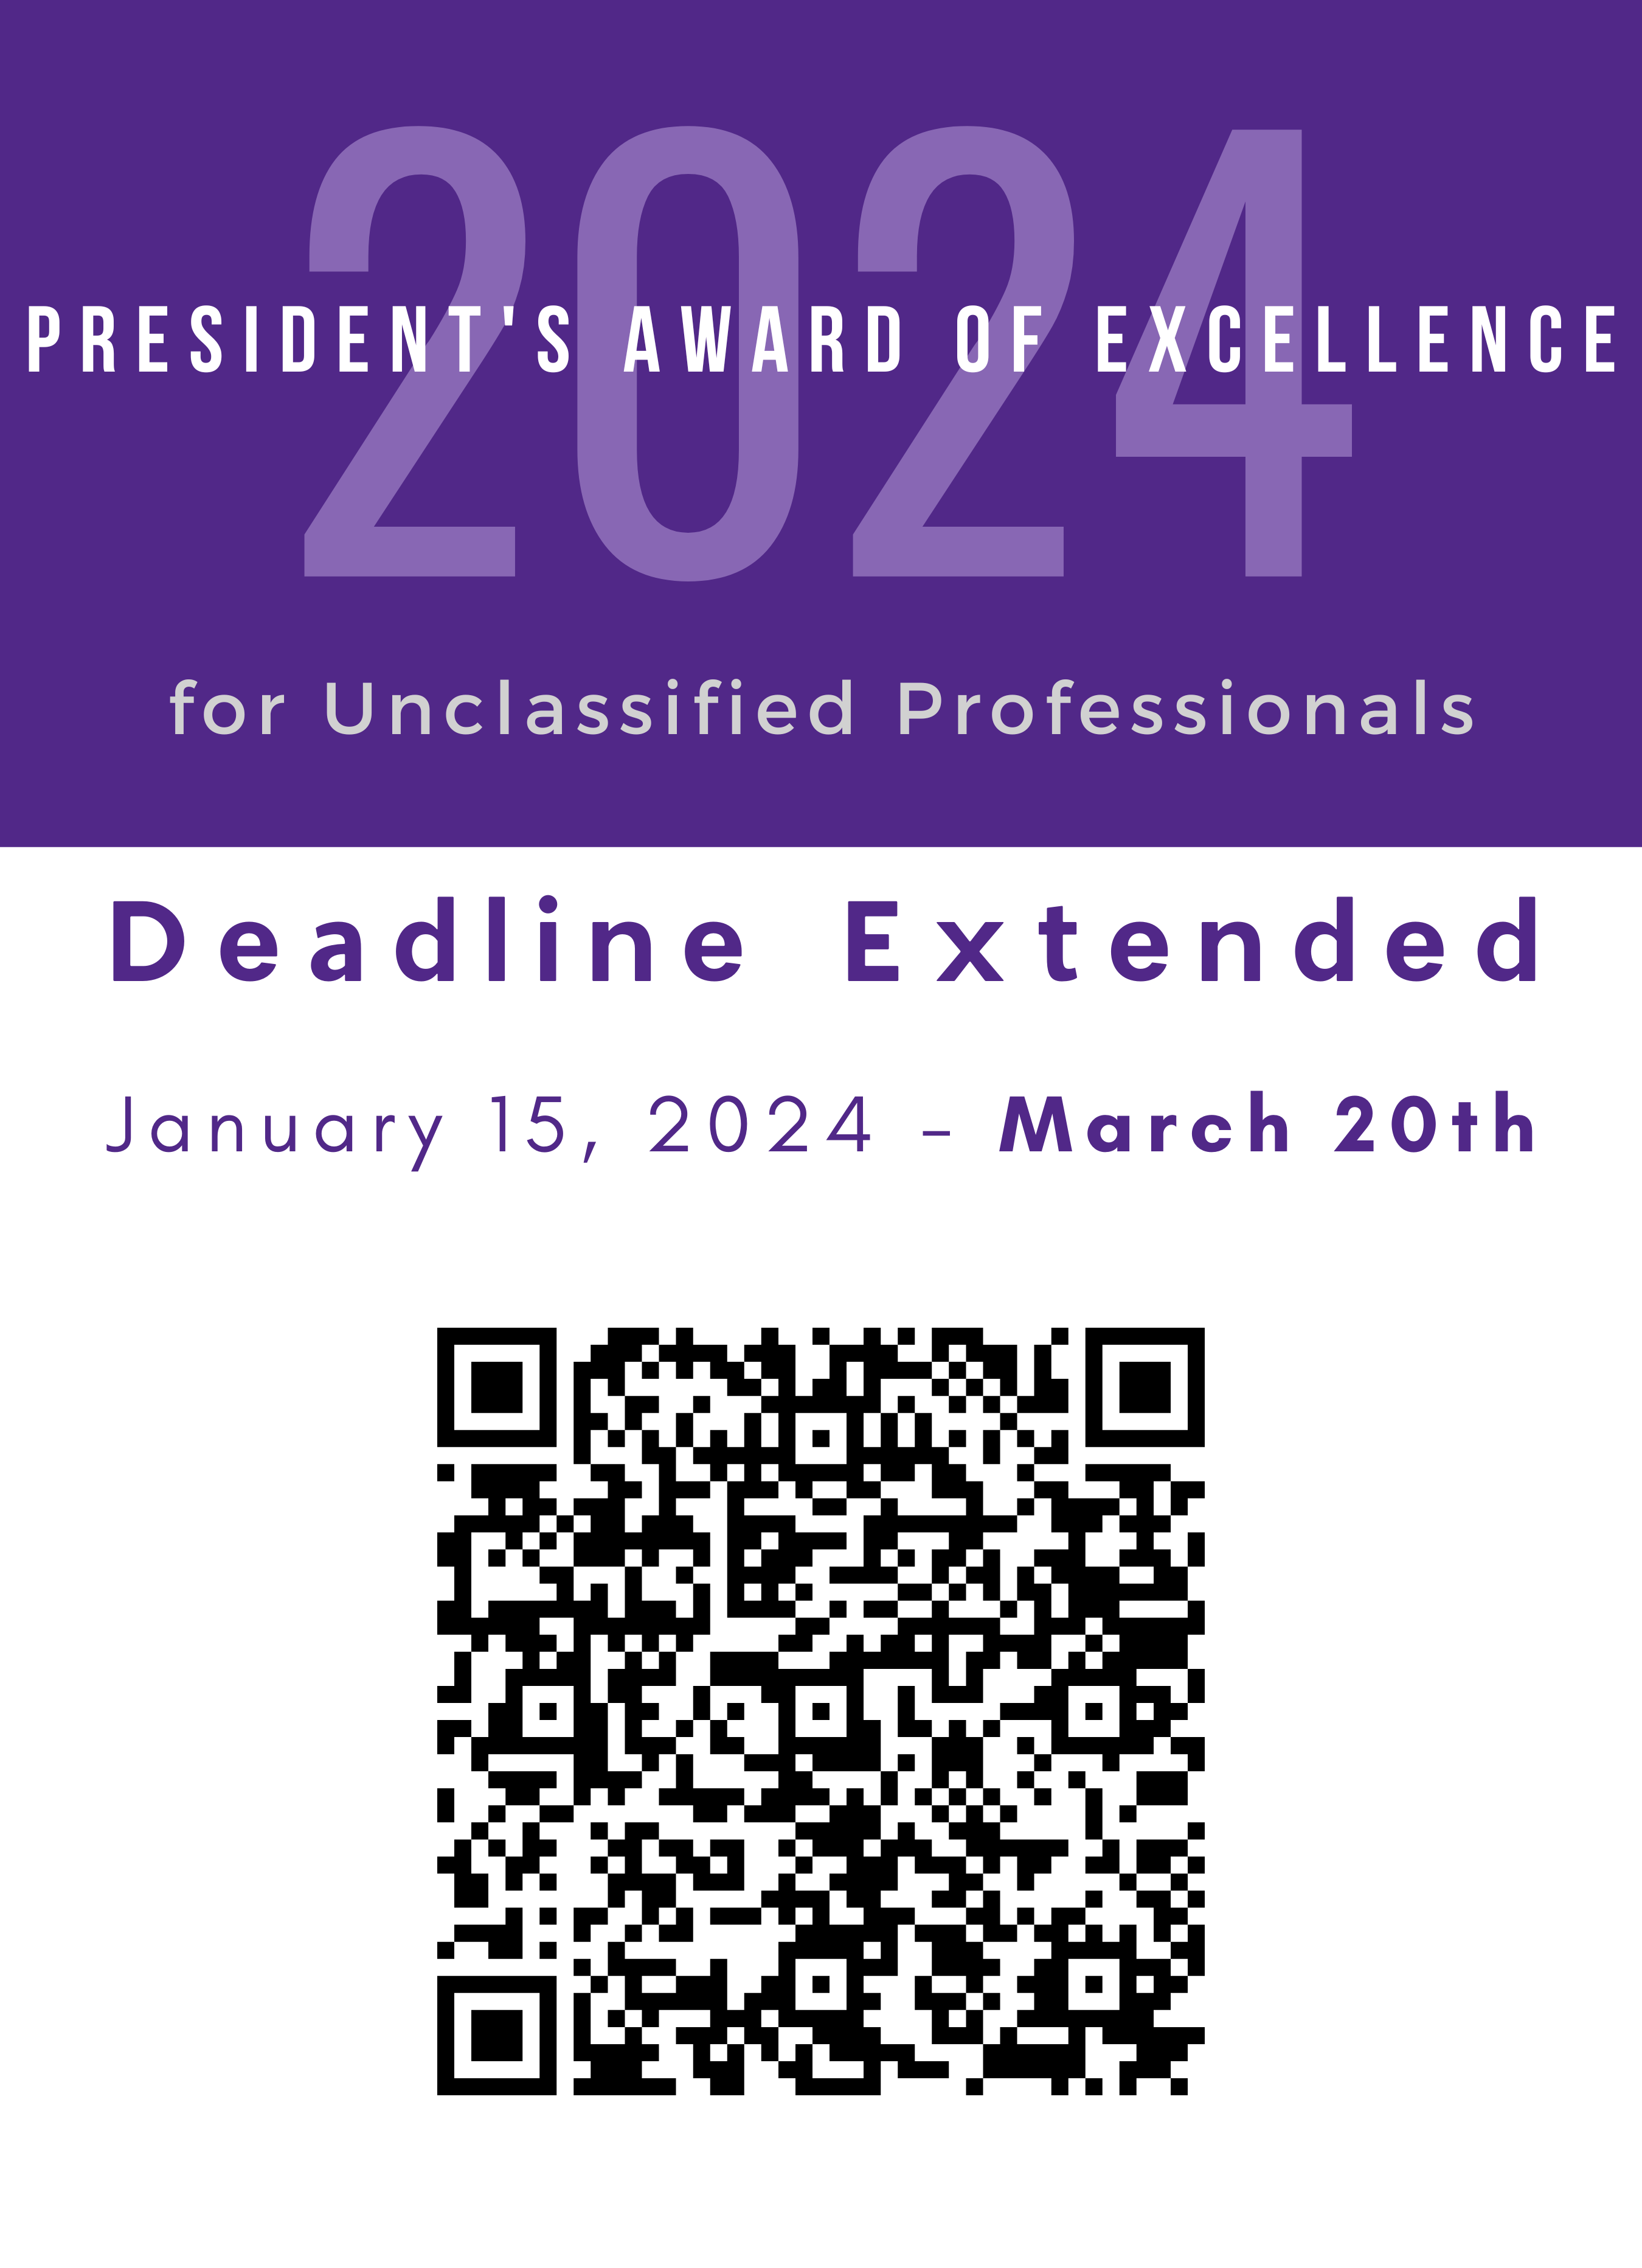 unc award deadline extension